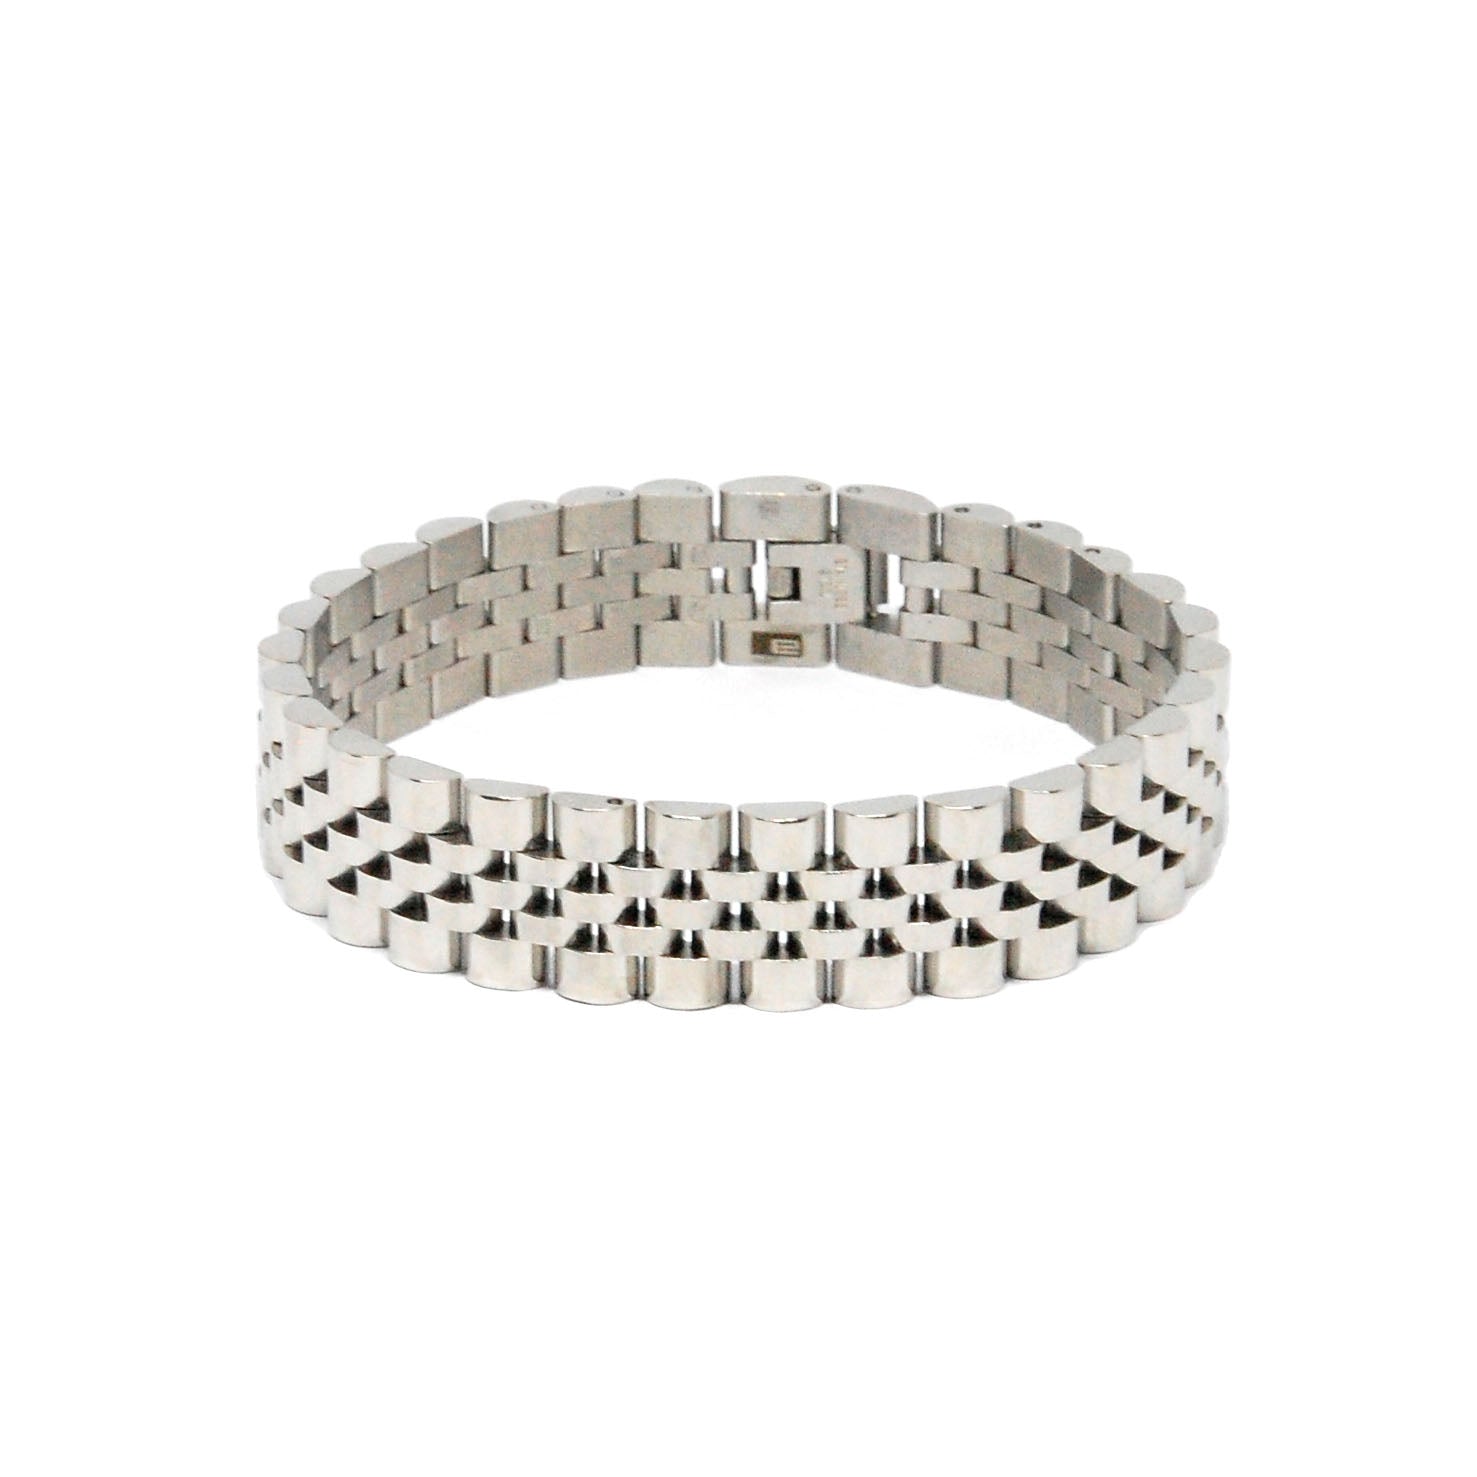 ESBL 7748: Intricate Rolex Male Bracelet